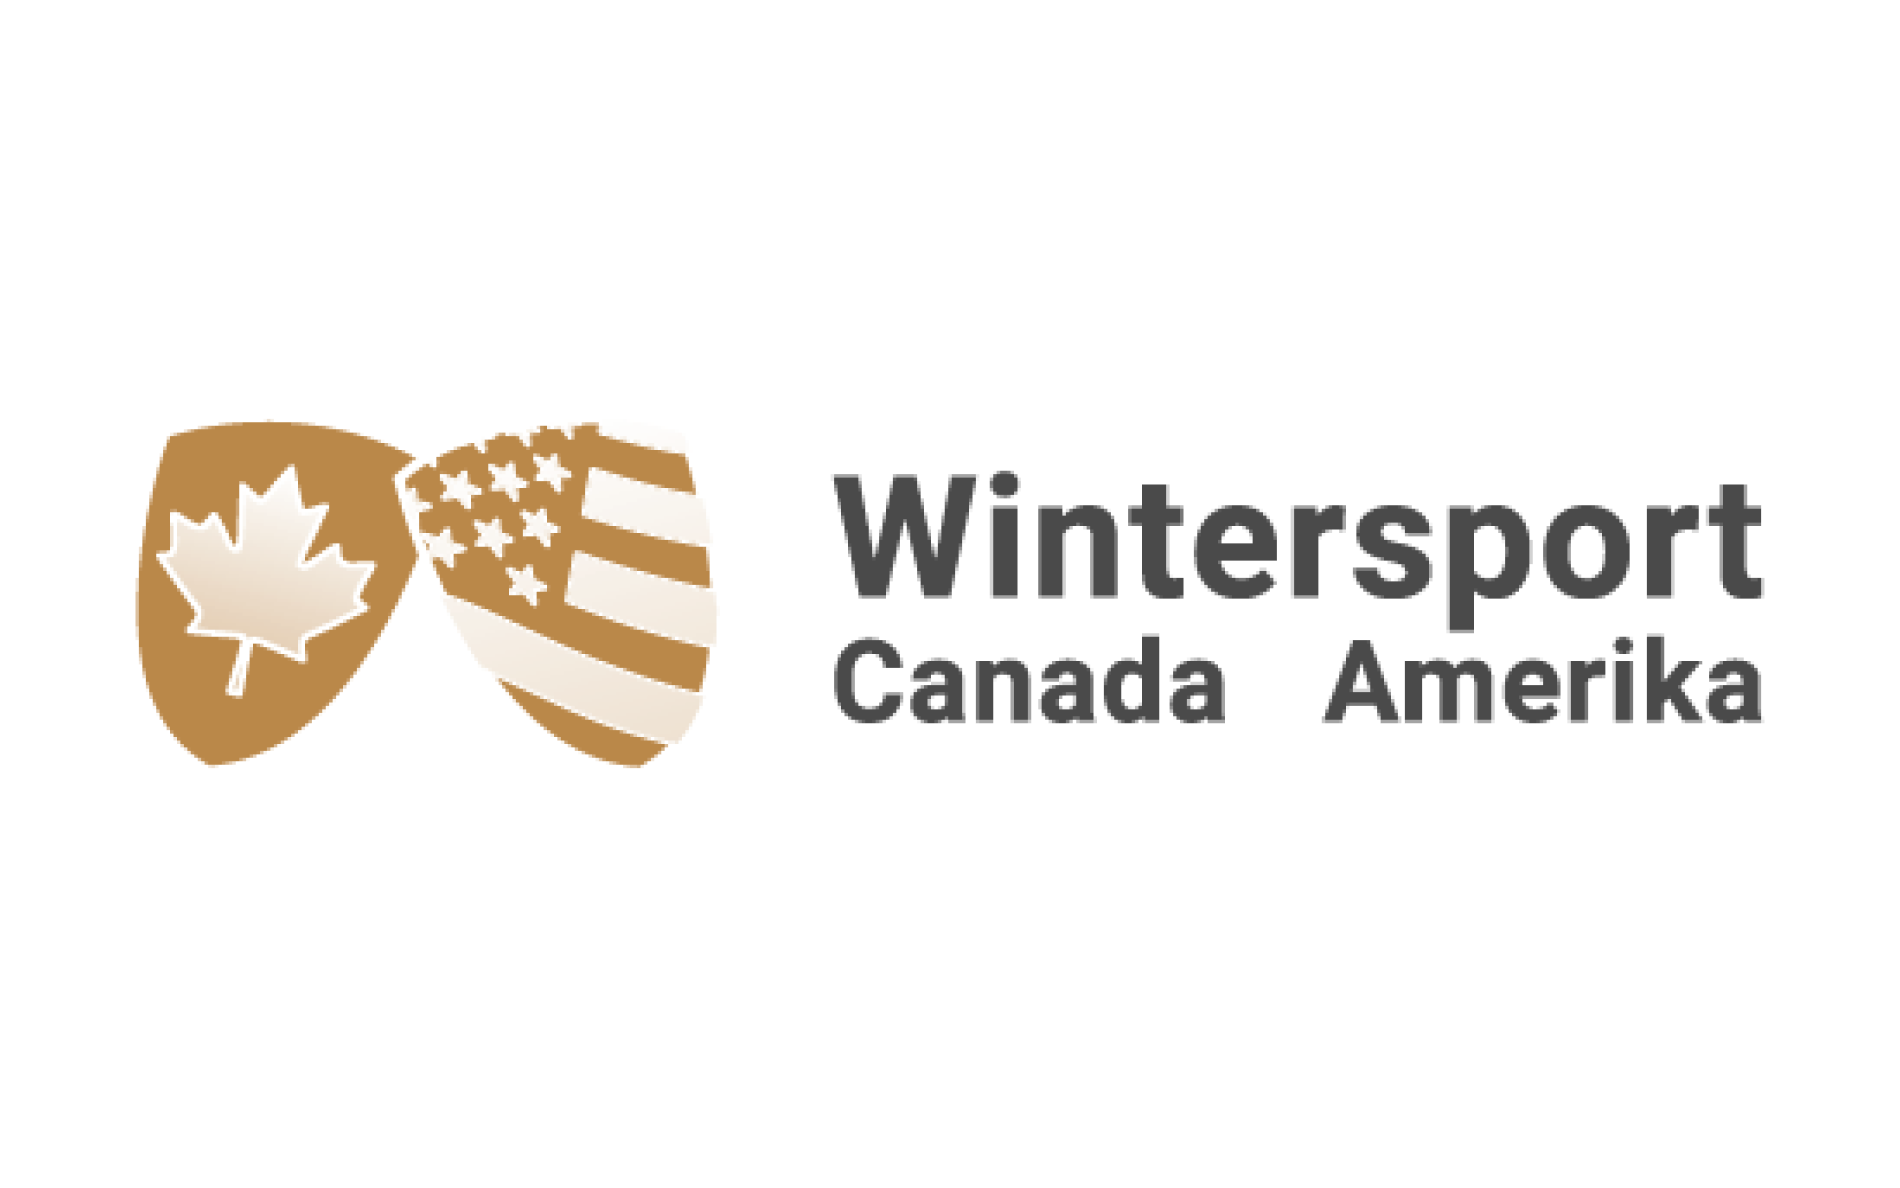 Wintersport Canada Amerika